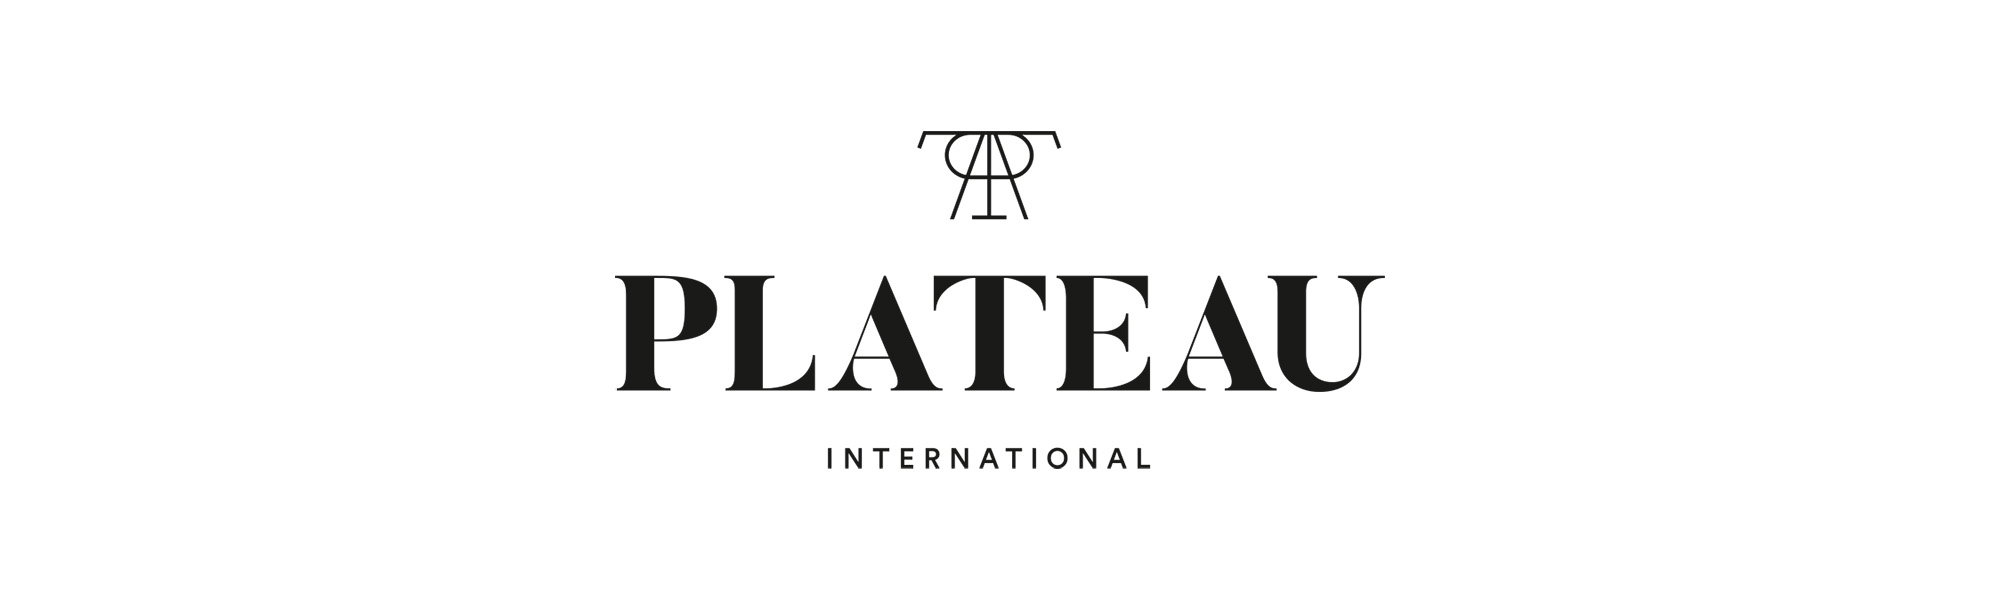 Plateau-International